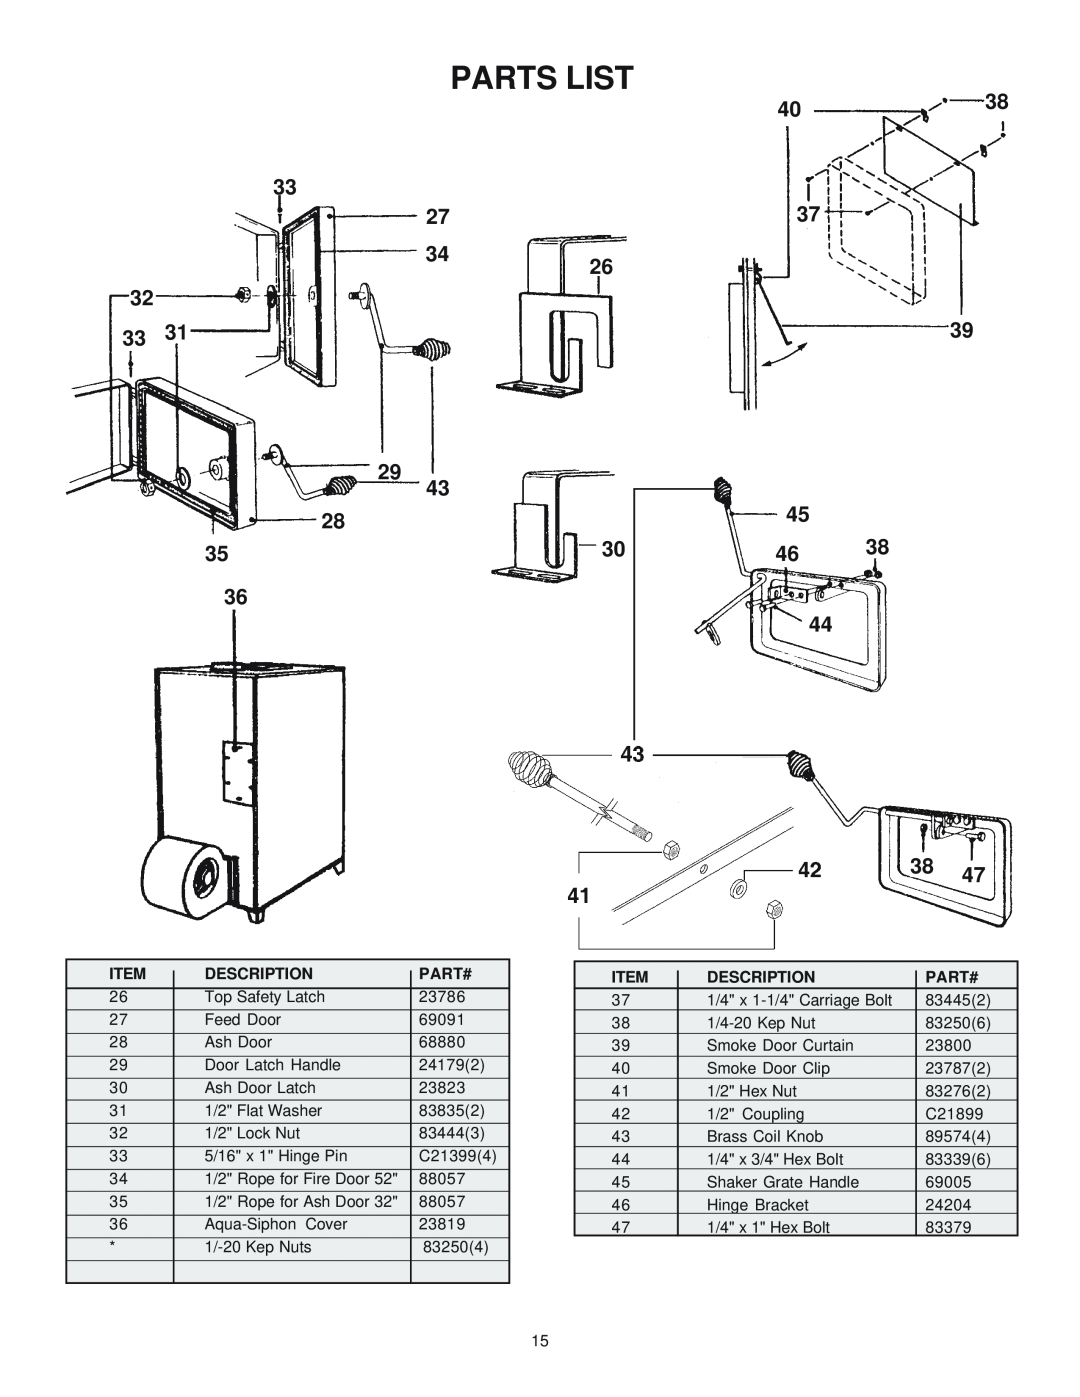 United States Stove 1600M manual 4038, Parts List 